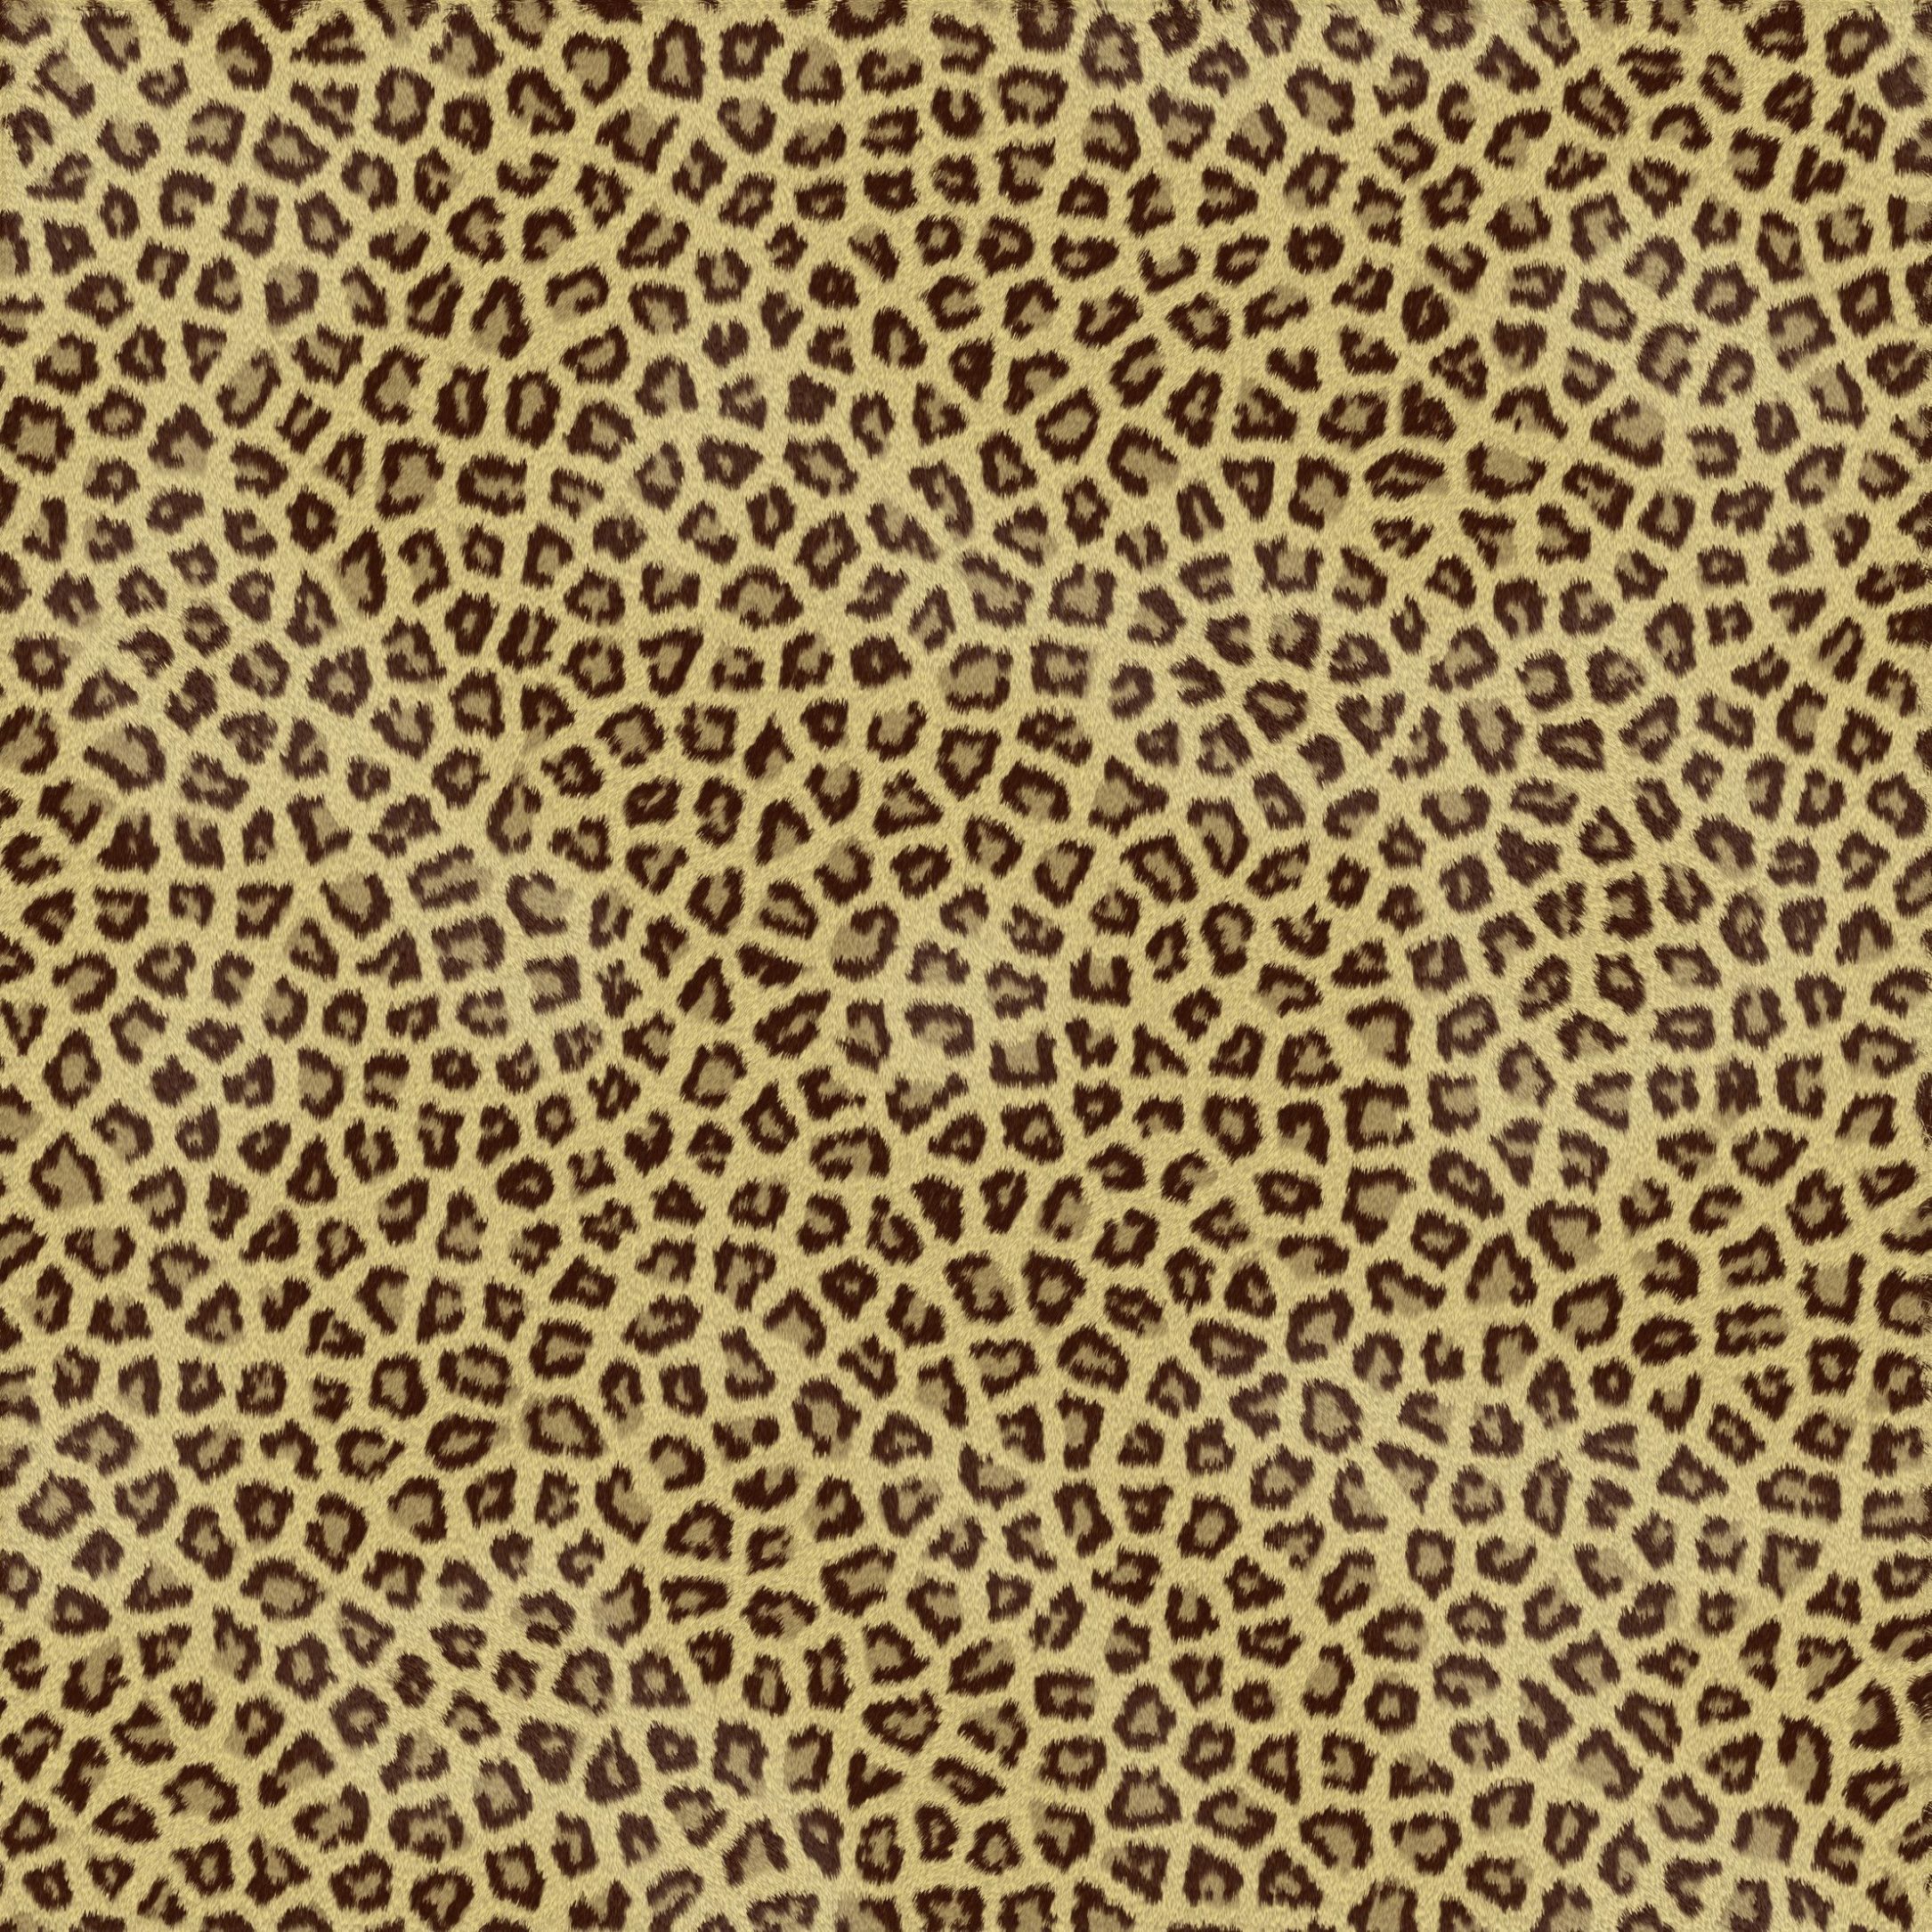 Decor: Cheetah Print Background. Animal Print Desktop Wallpaper